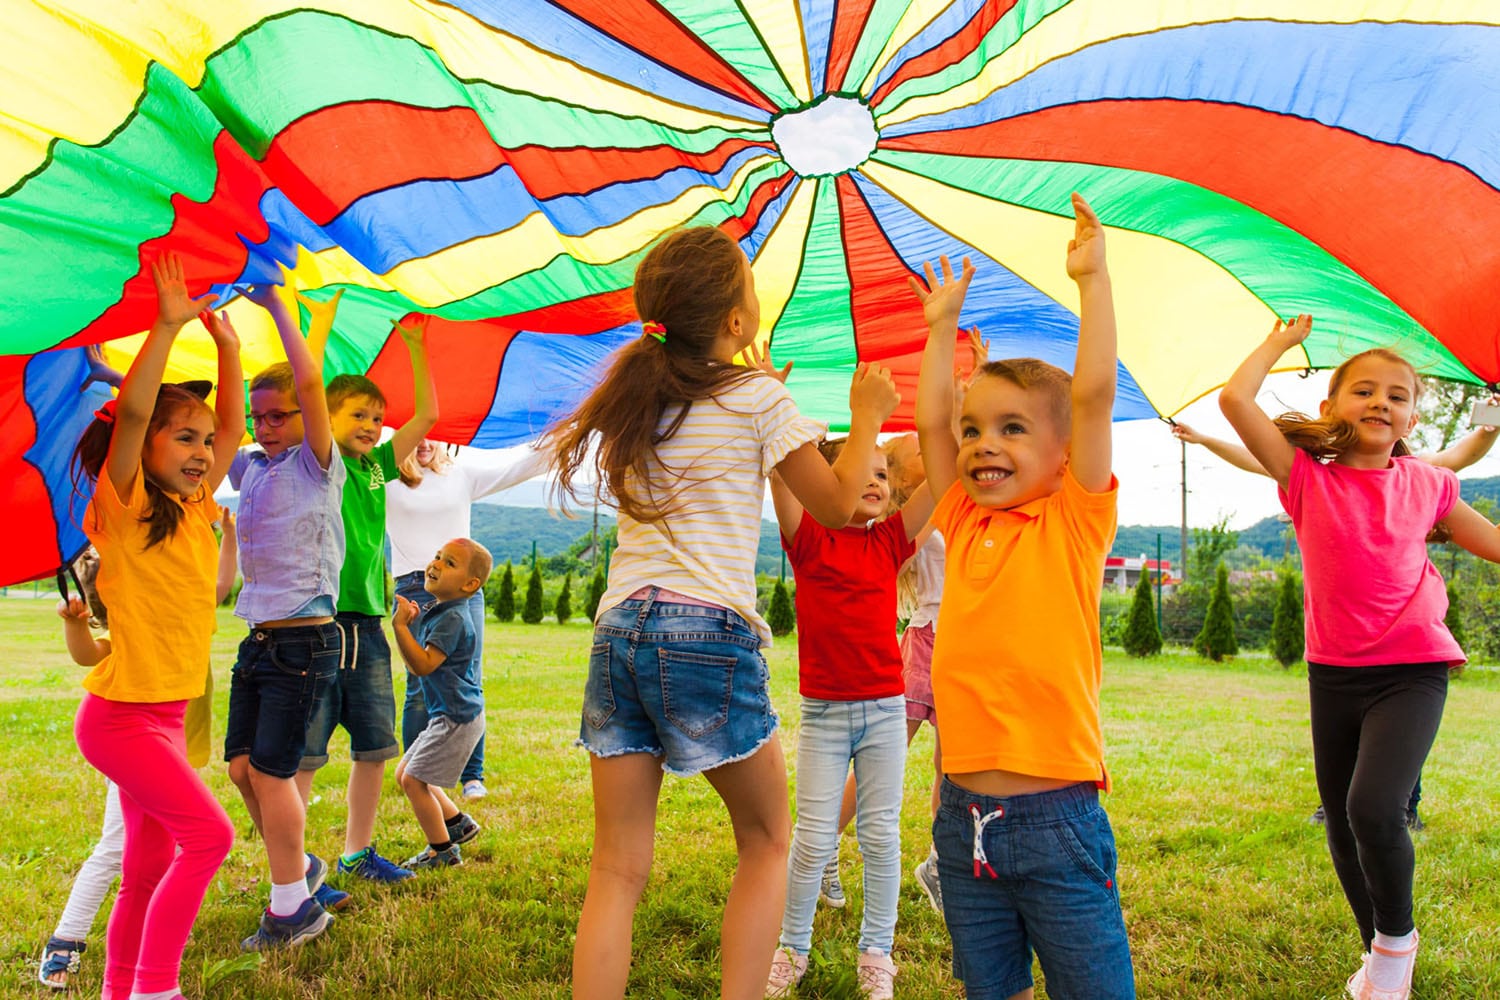 children playing in park under large umbrella